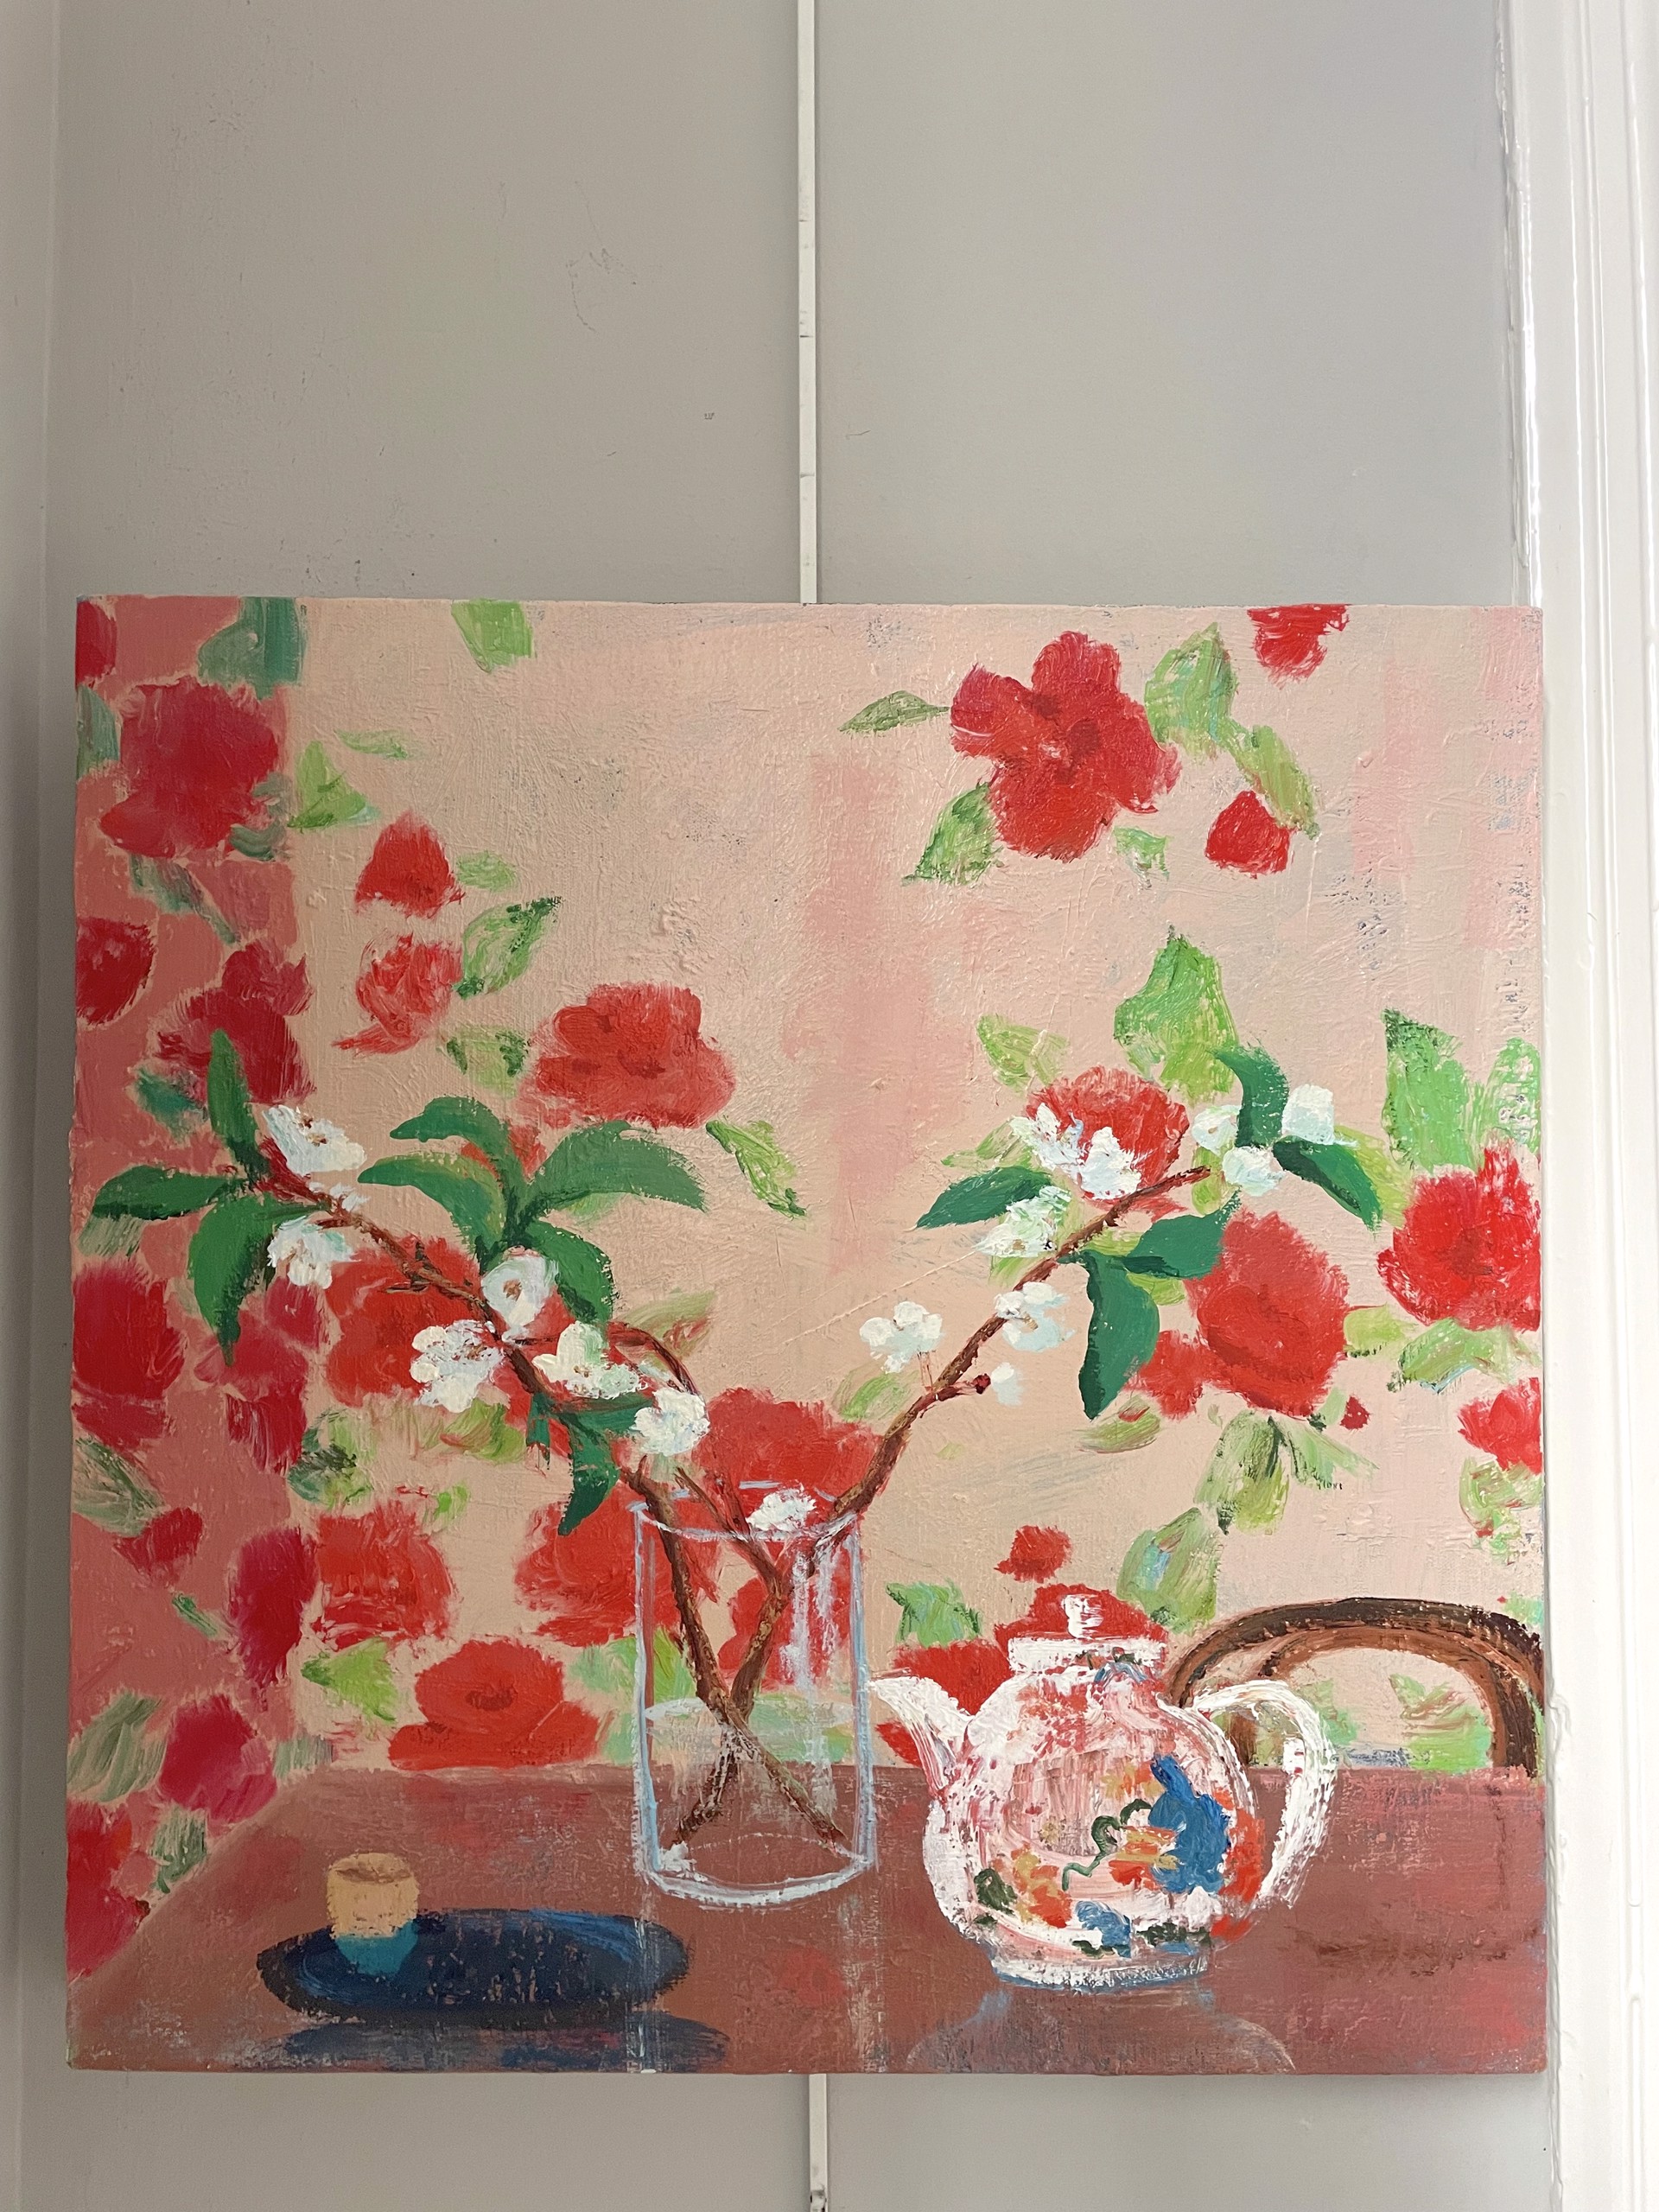 Rosey Rosey Rose by Melanie Parke